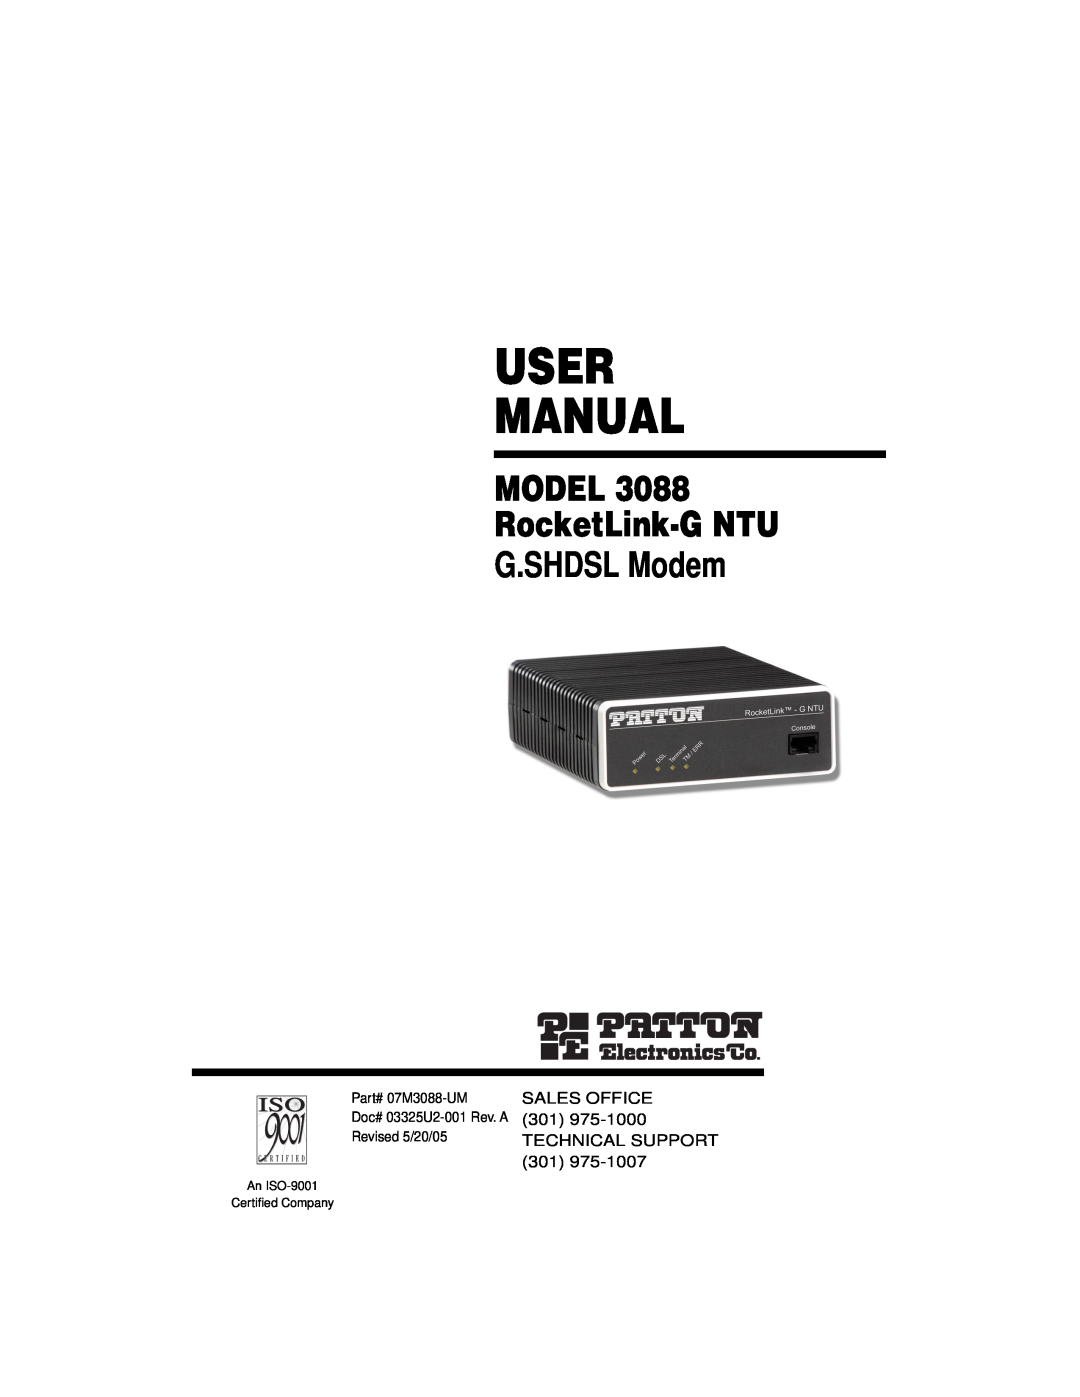 Patton electronic user manual User Manual, G.SHDSL Modem, MODEL 3088 RocketLink-G NTU, An ISO-9001 Certiﬁed Company 